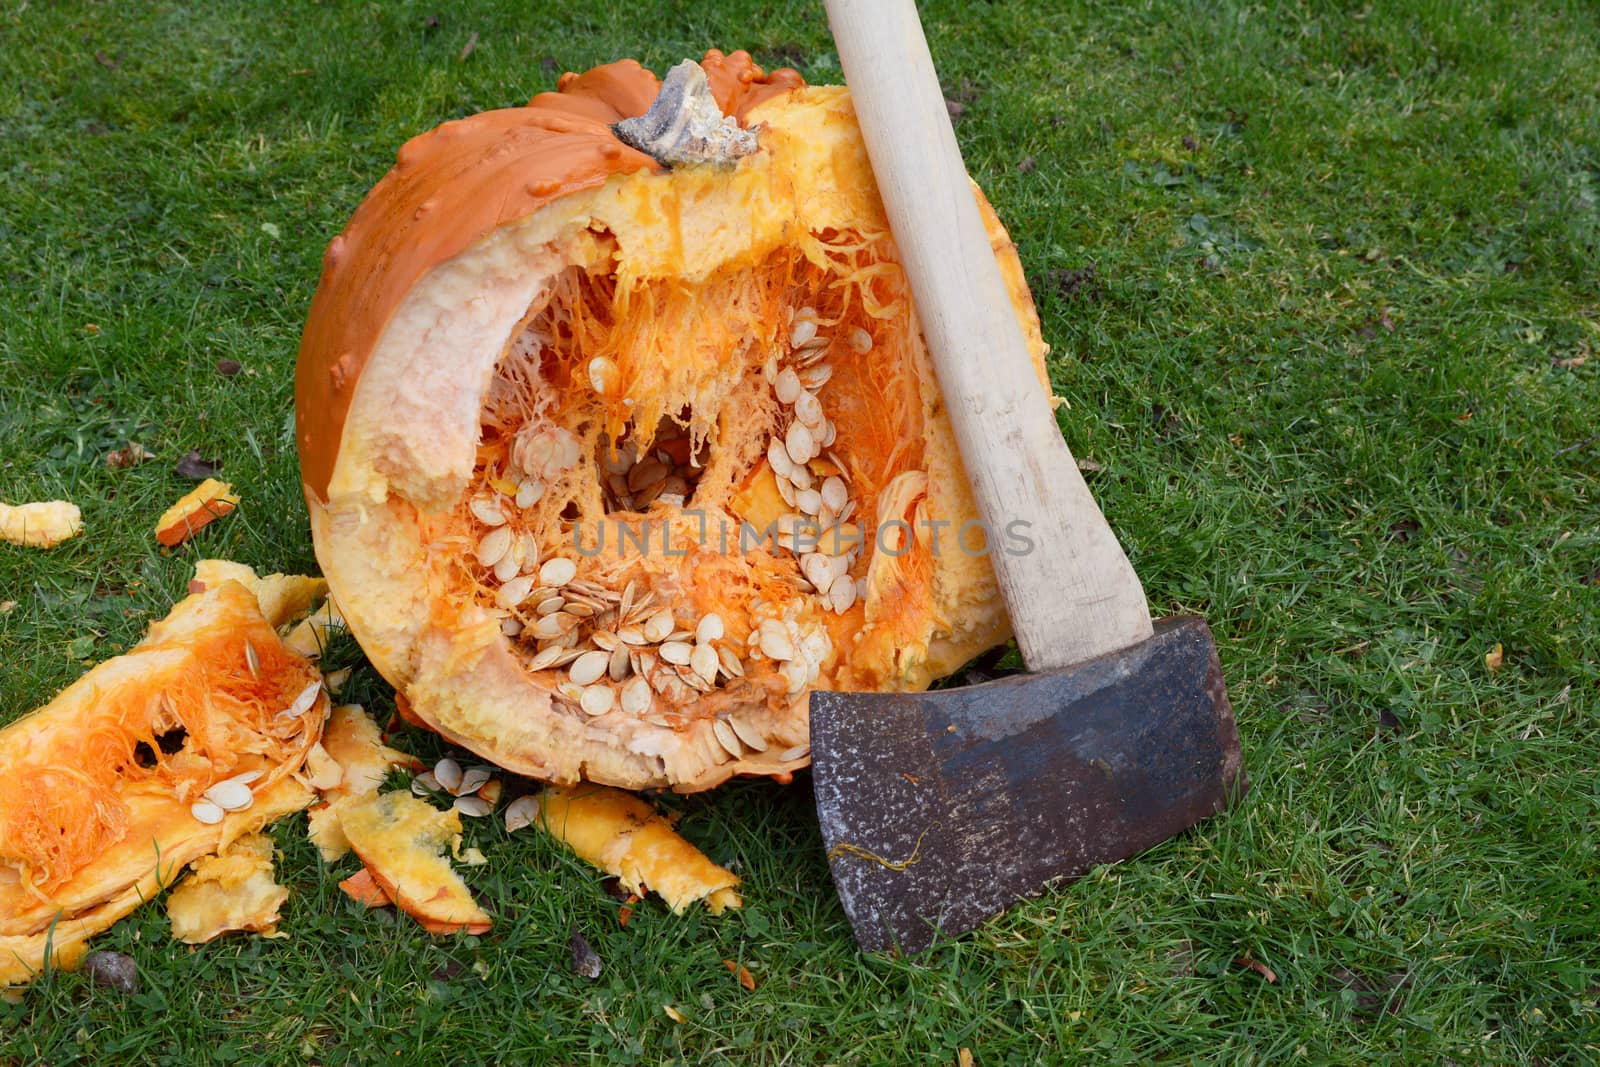 Long-handled axe against a warty orange pumpkin by sarahdoow